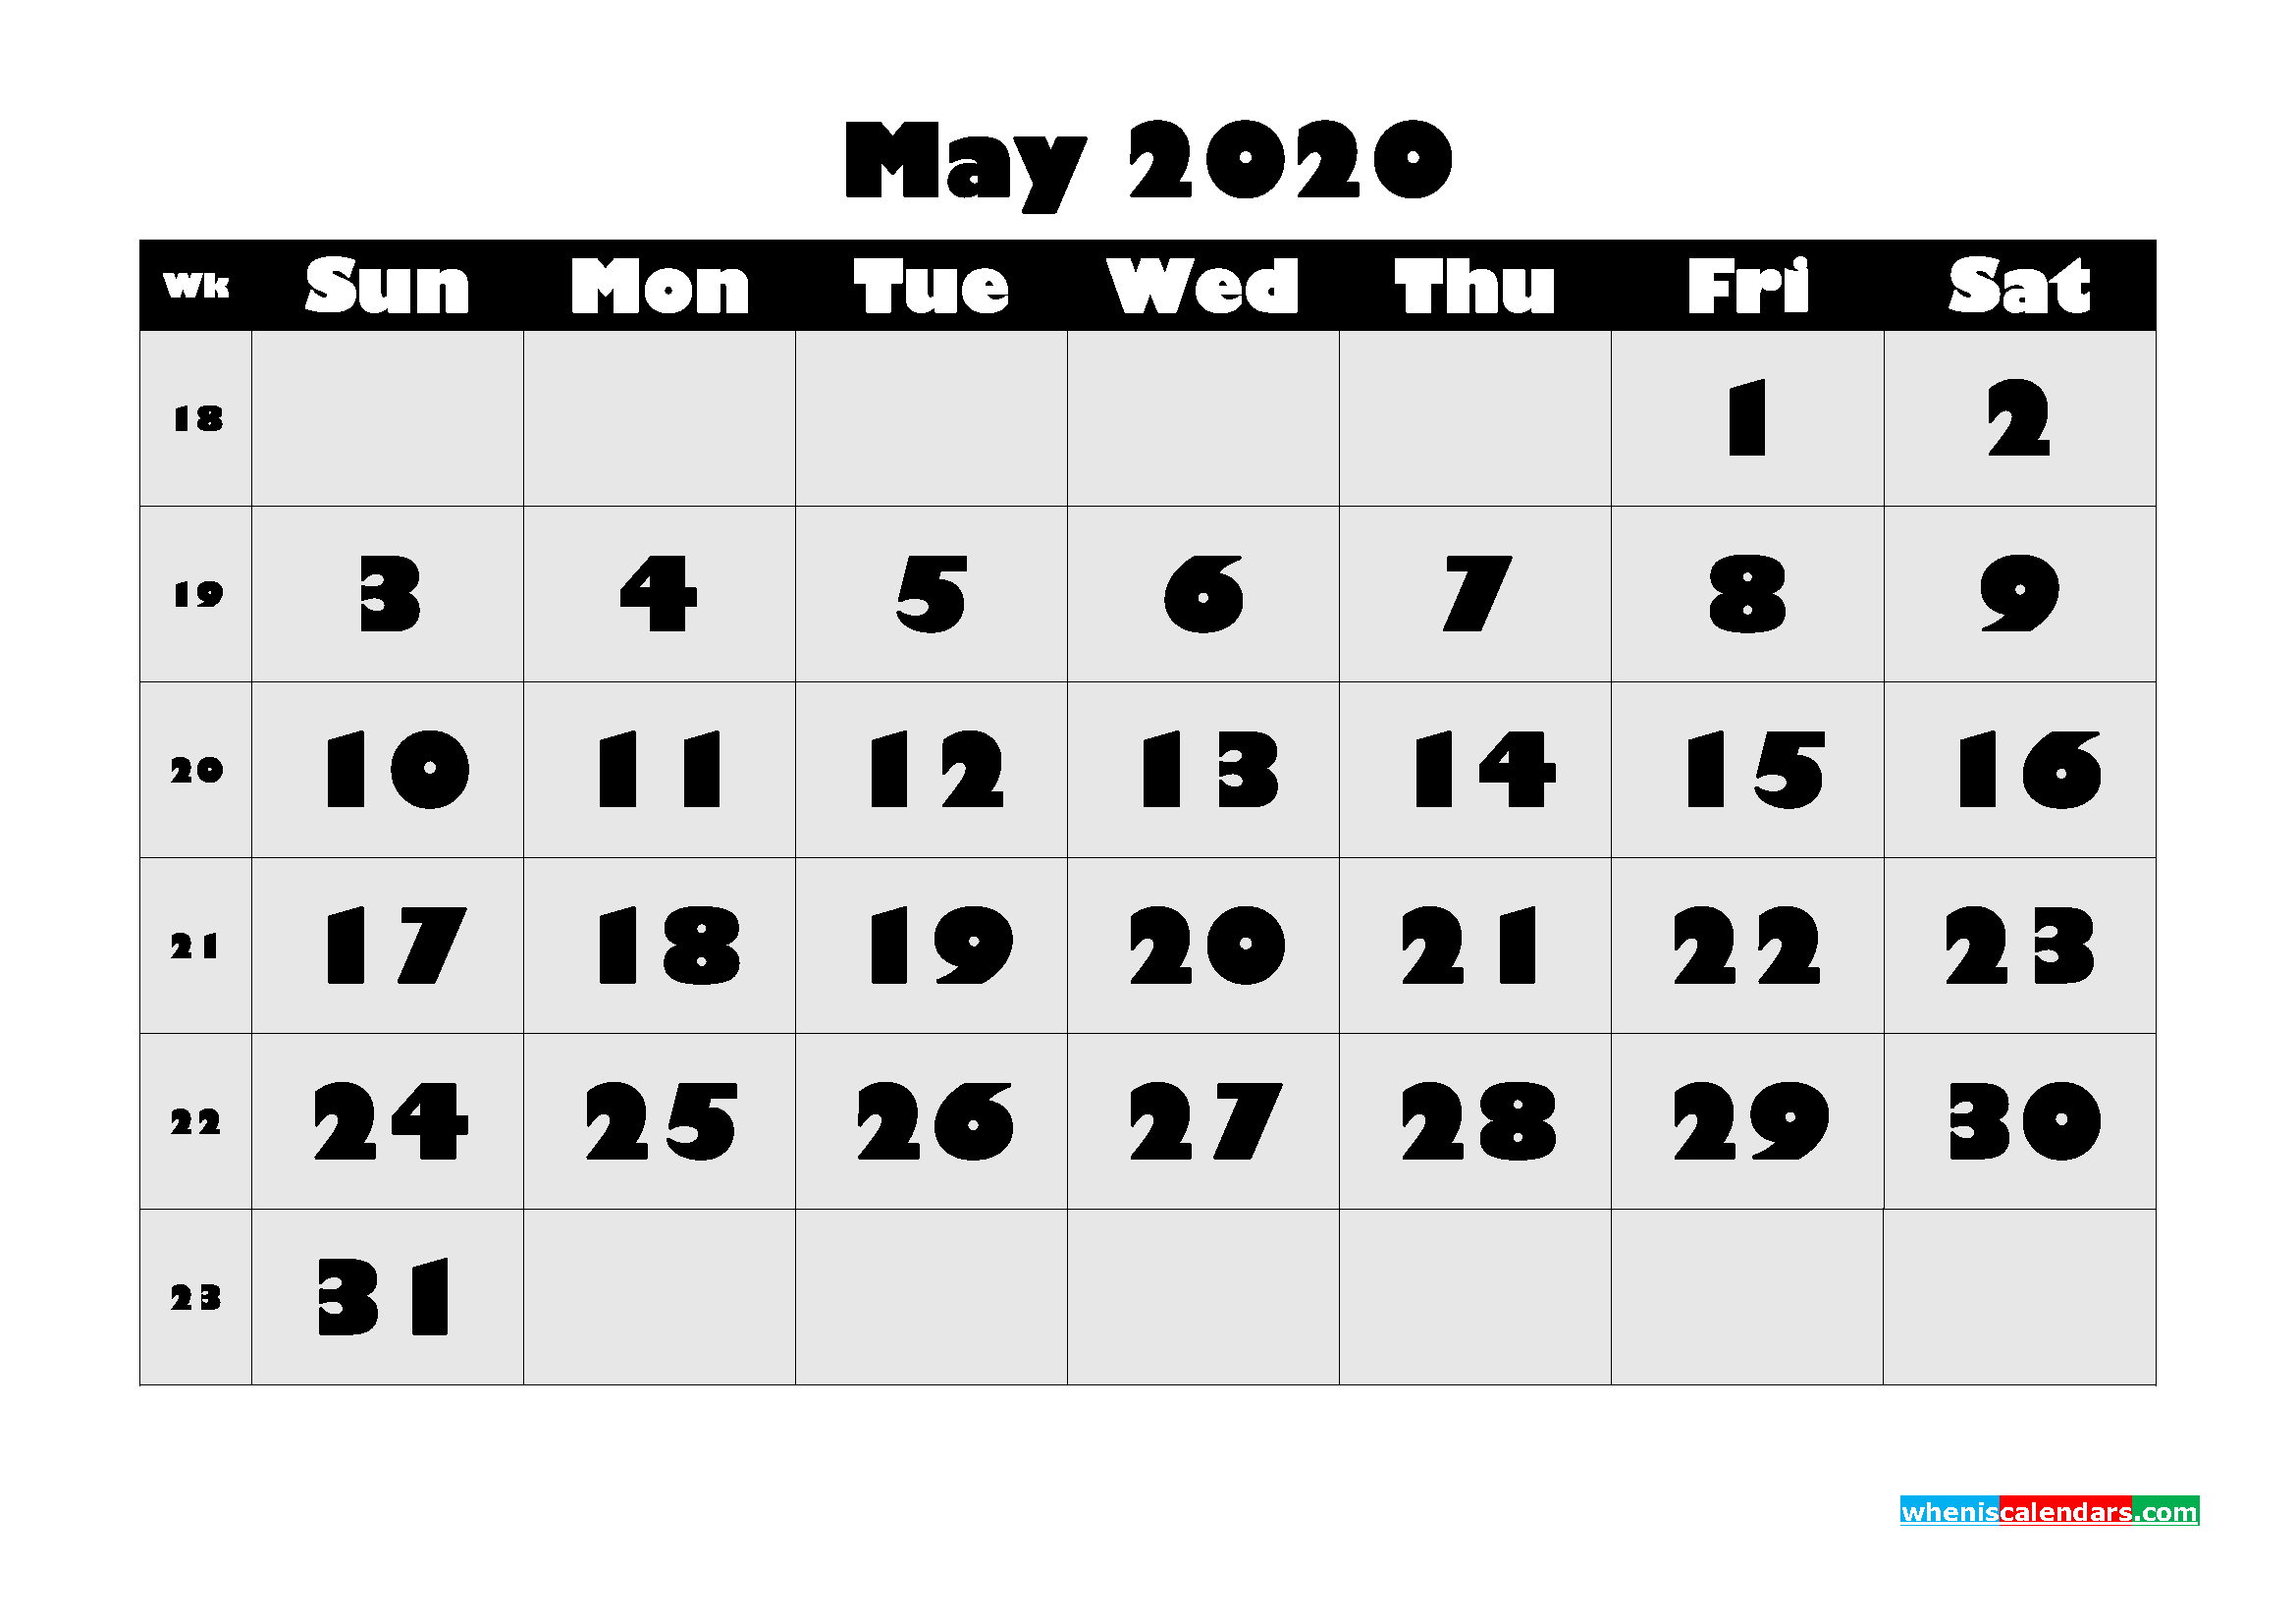 Printable Monthly Calendar 2020 May with Week Numbers